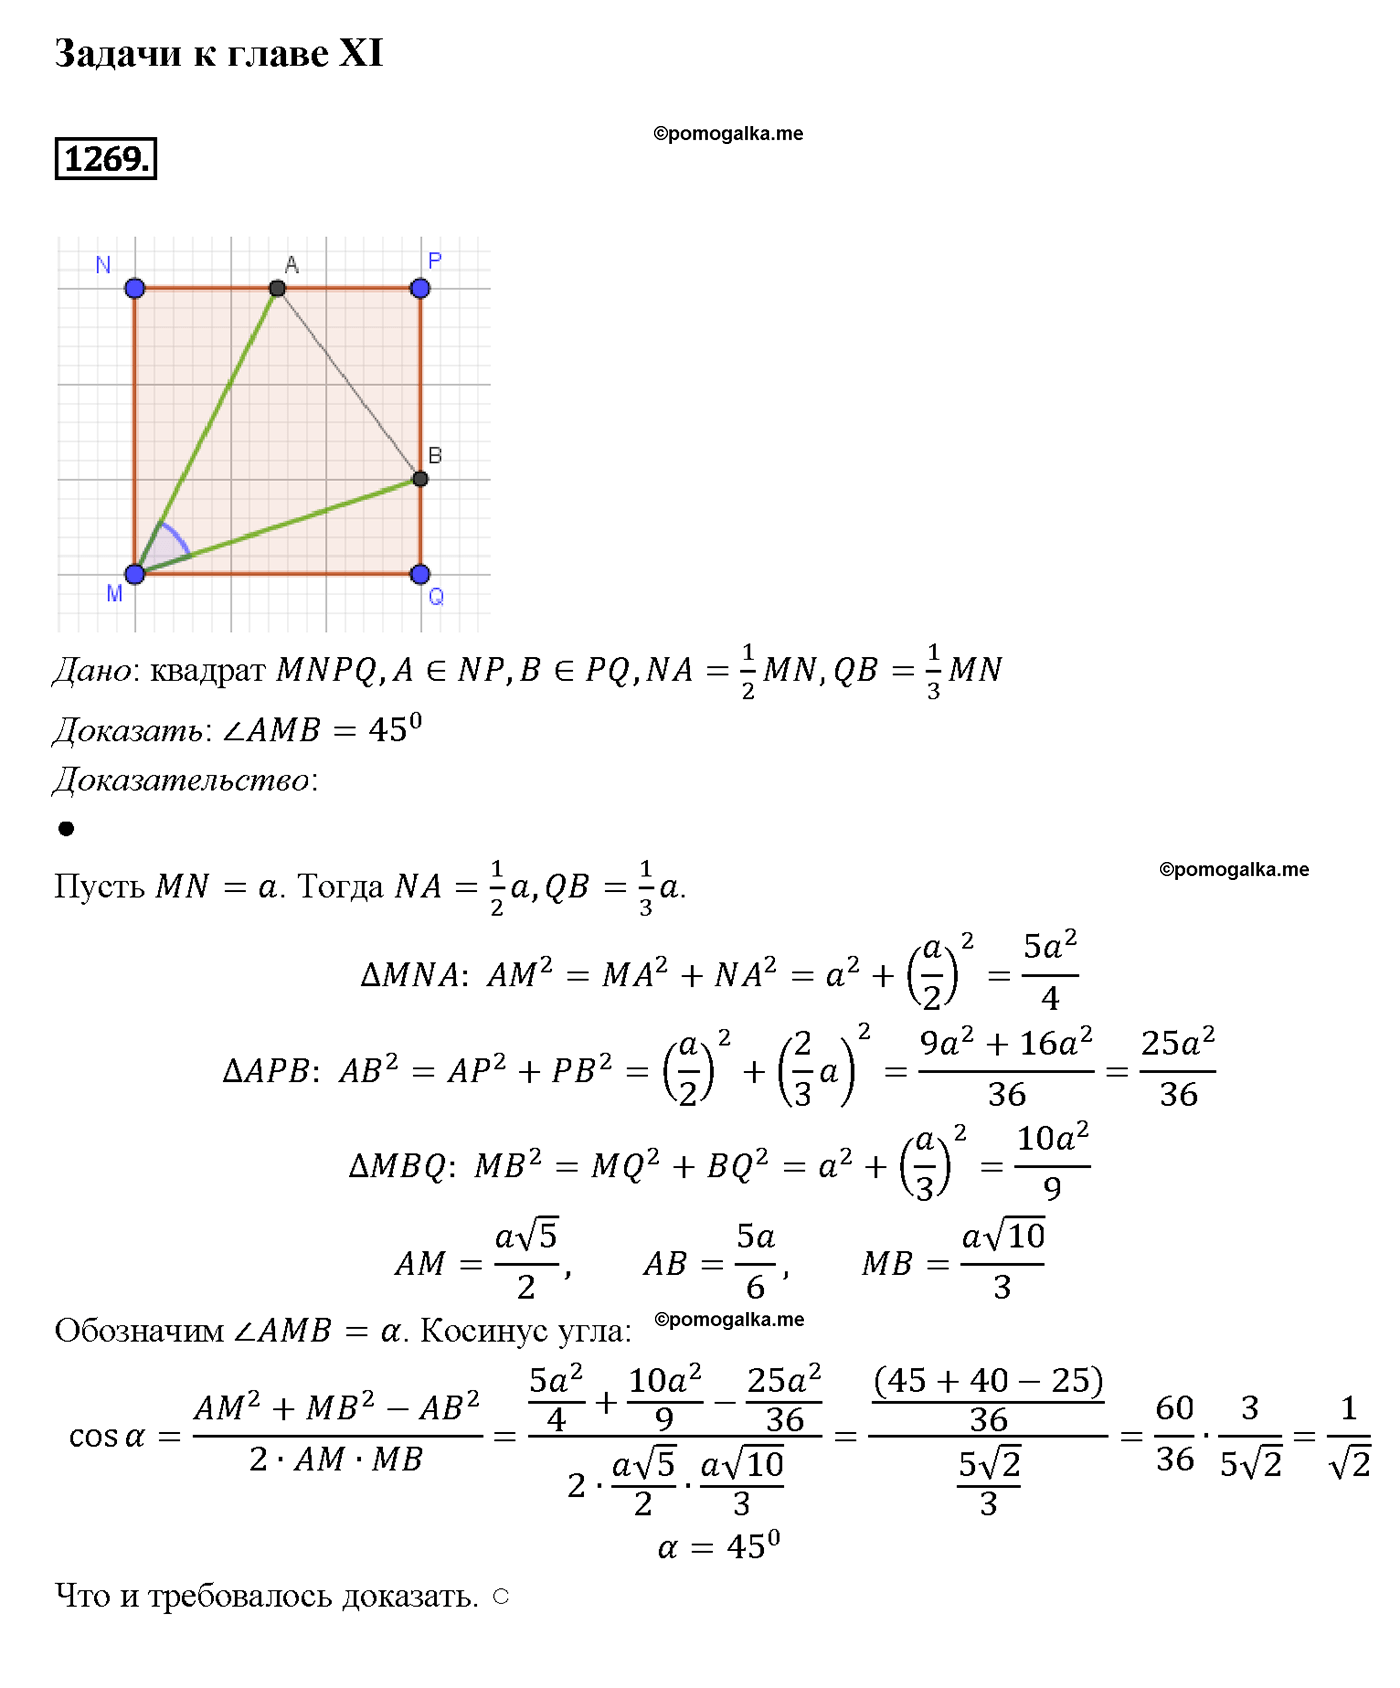 страница 331 номер 1269 геометрия 7-9 класс Атанасян учебник 2014 год